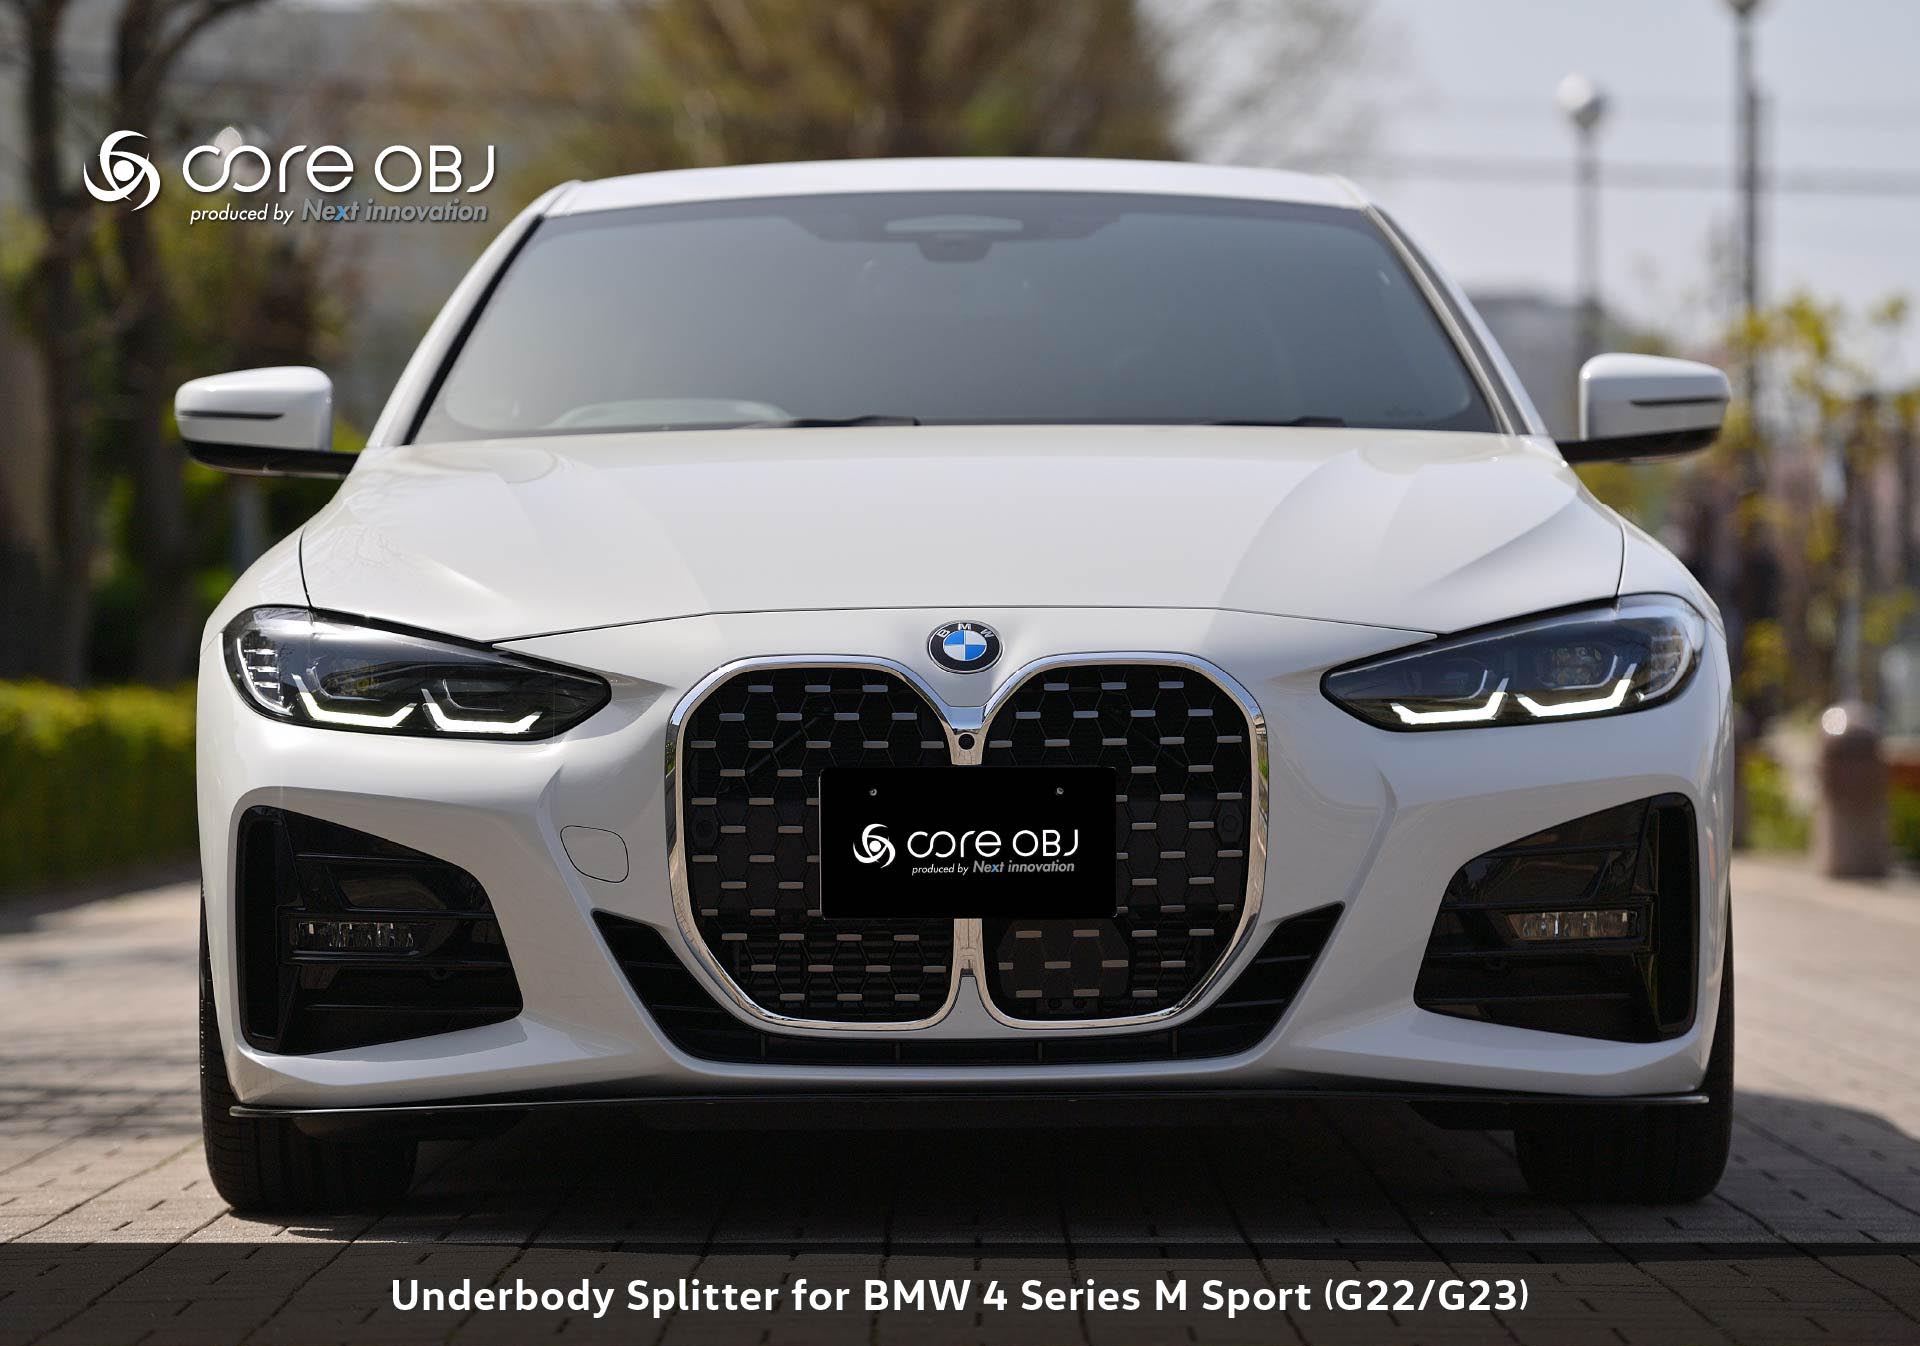 Underbody Splitter for BMW 4 Series M Sport (G22/G23)